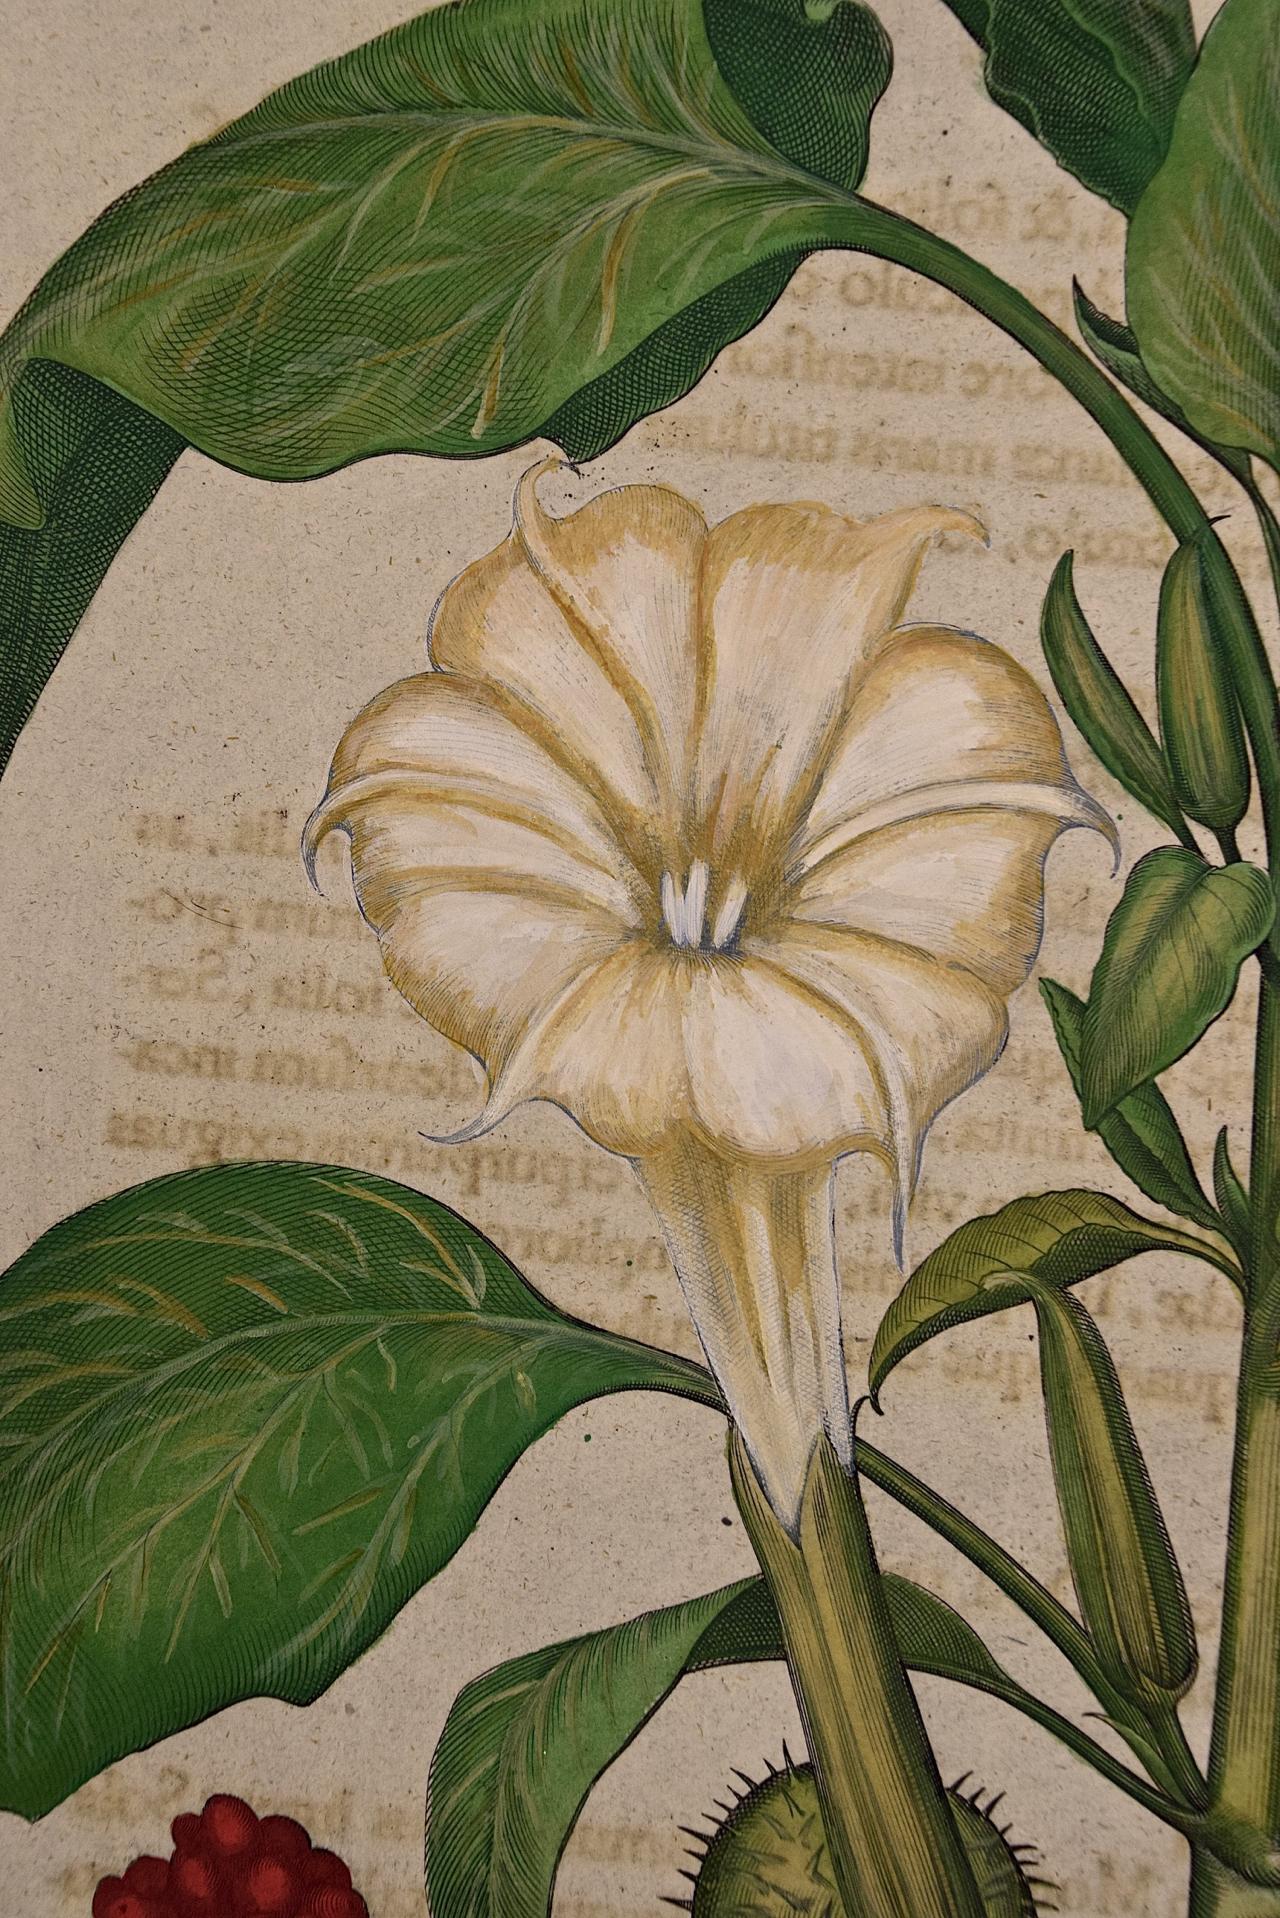 Besler Hand-colored Botanical Engraving of Flowering Green Dragon Plants   - Print by Basilius Besler